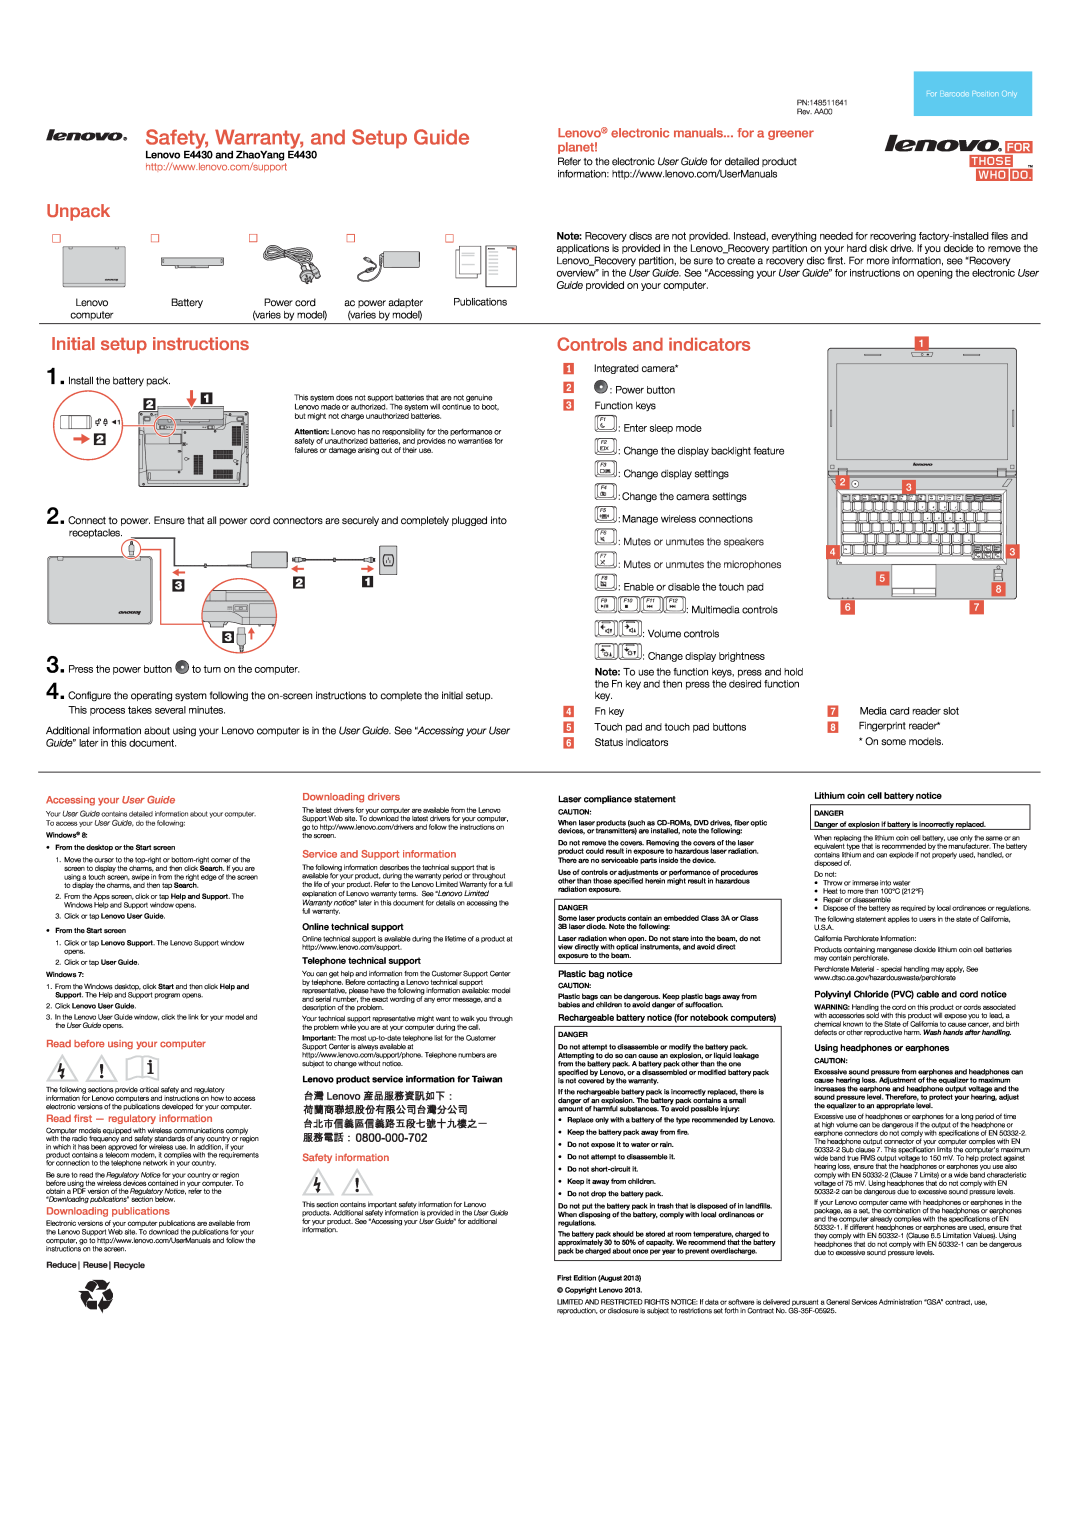 Lenovo E4430 warranty Safety, Warranty, and Setup Guide, Unpack, Initial setup instructions, Controls and indicators 